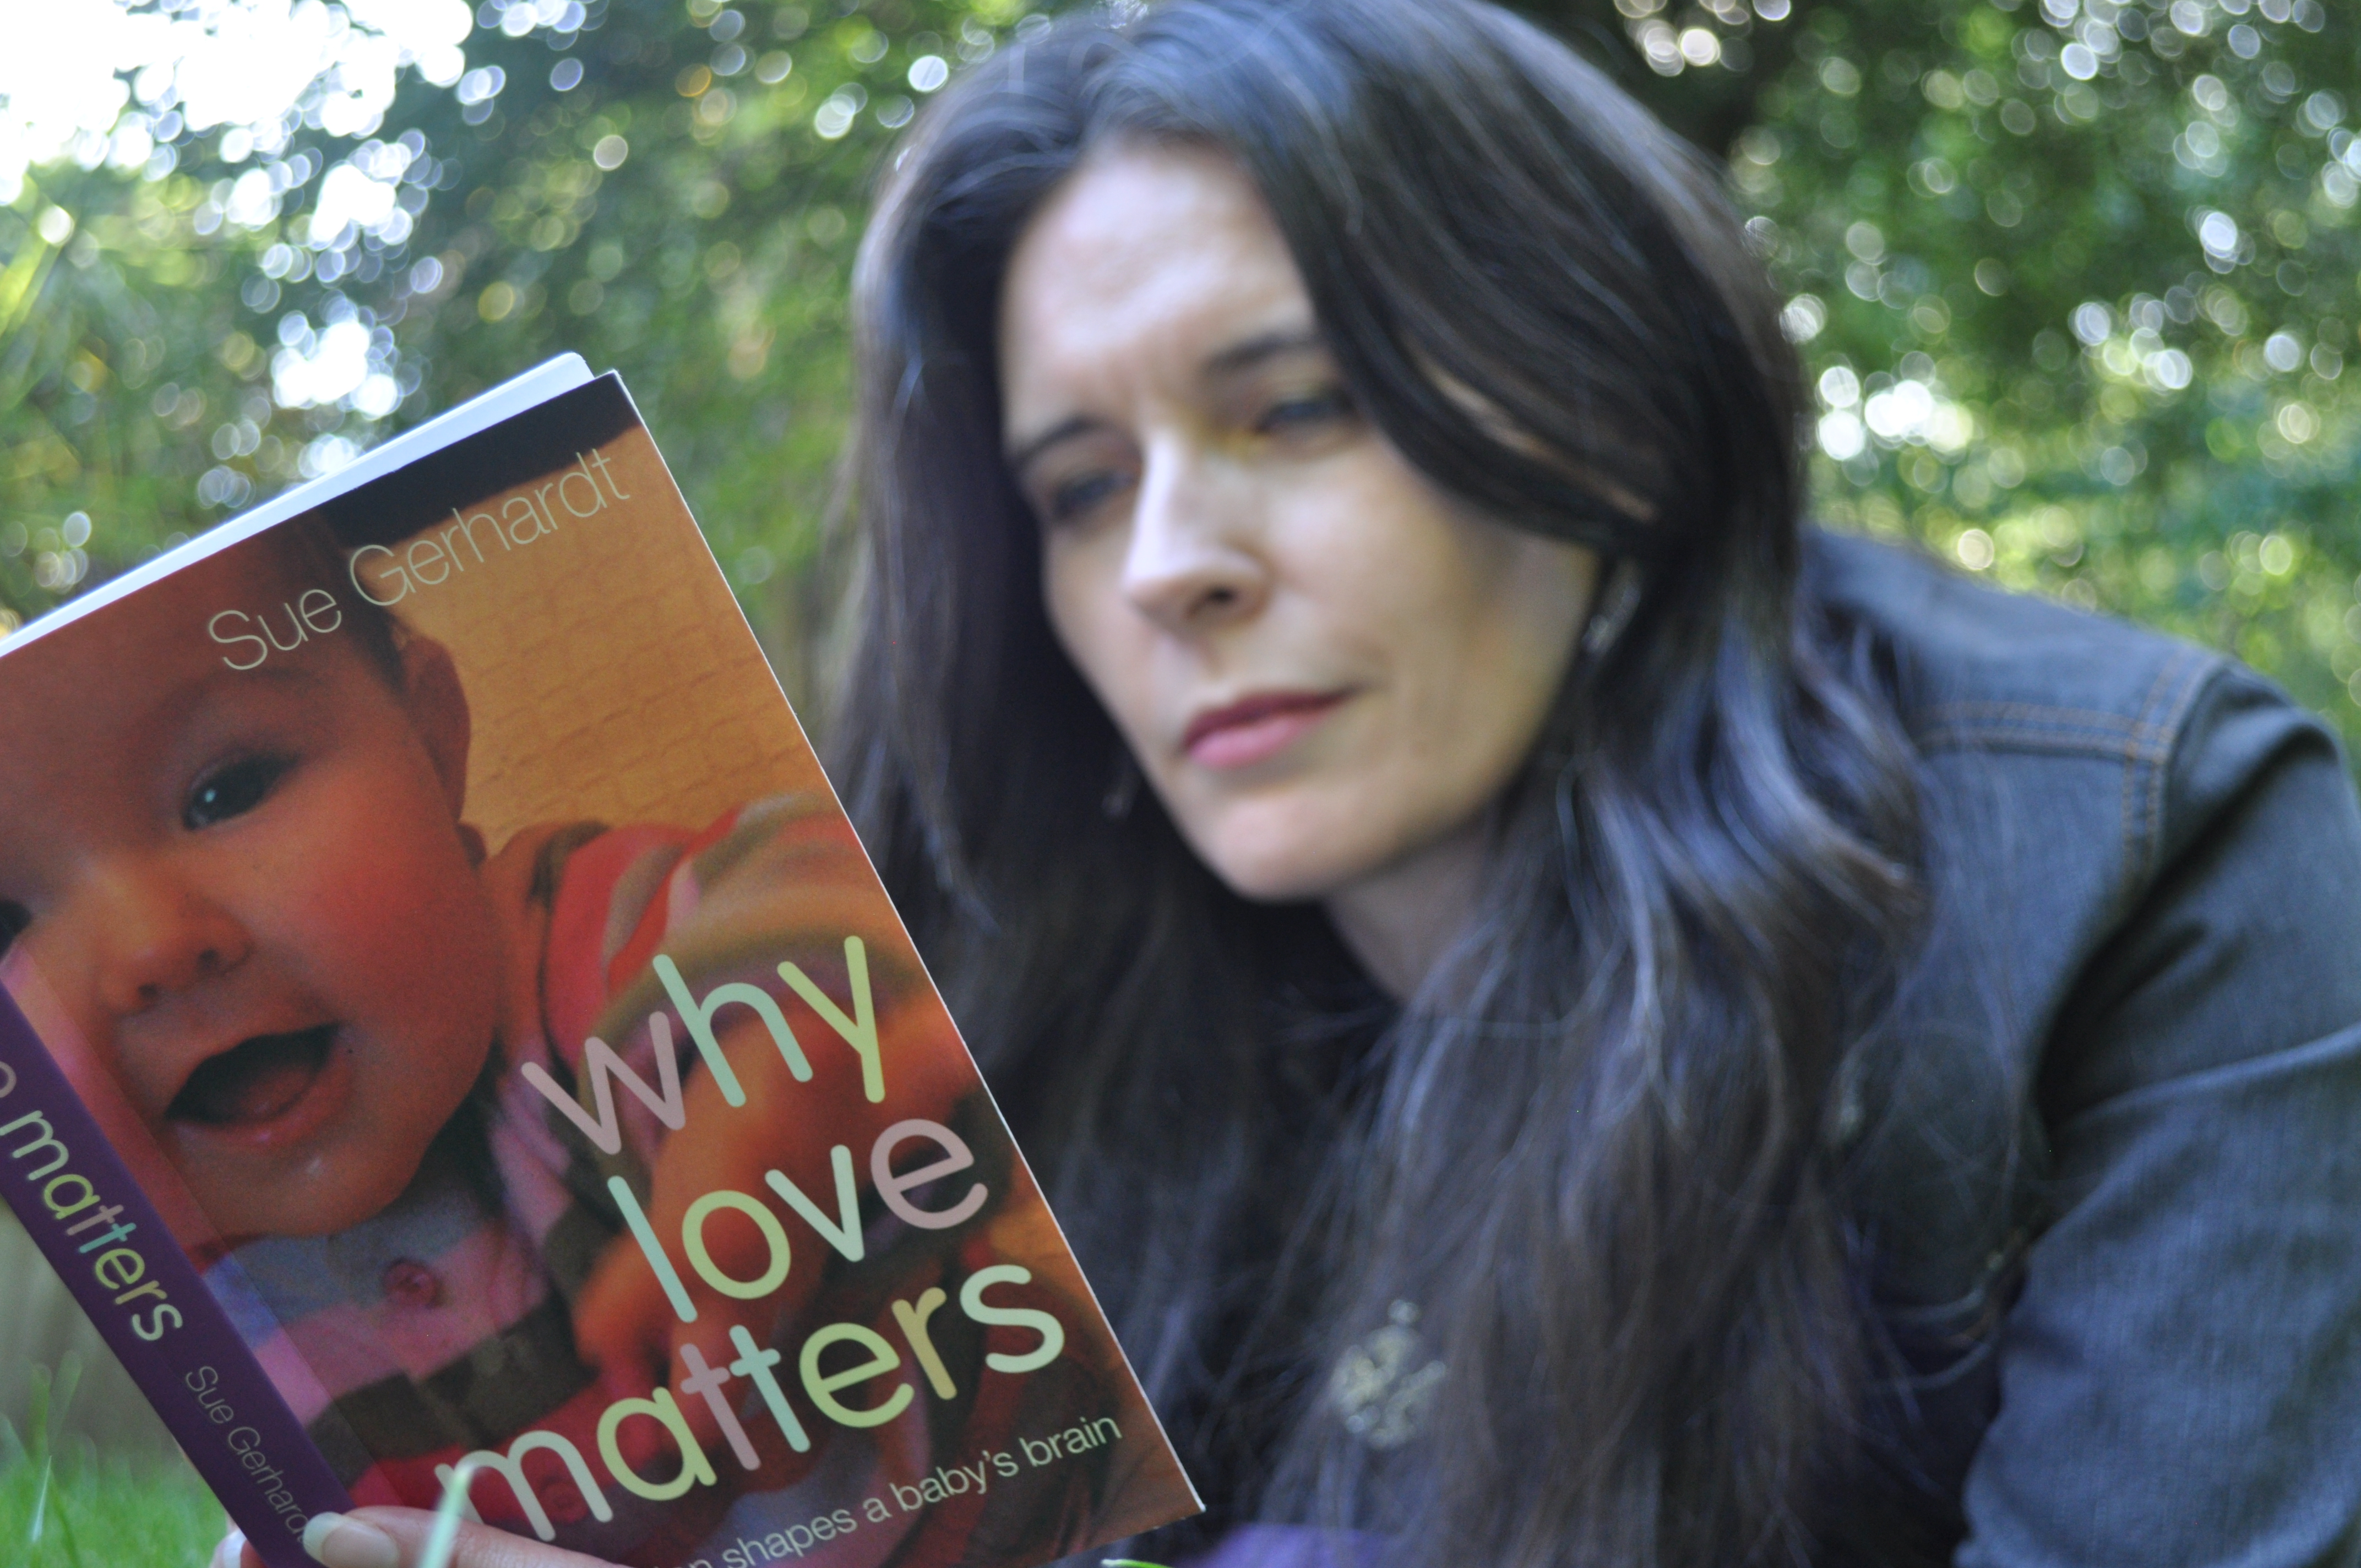 Jacqui McGinn (caucasian female with long dark hair) reads the book "why love matters".